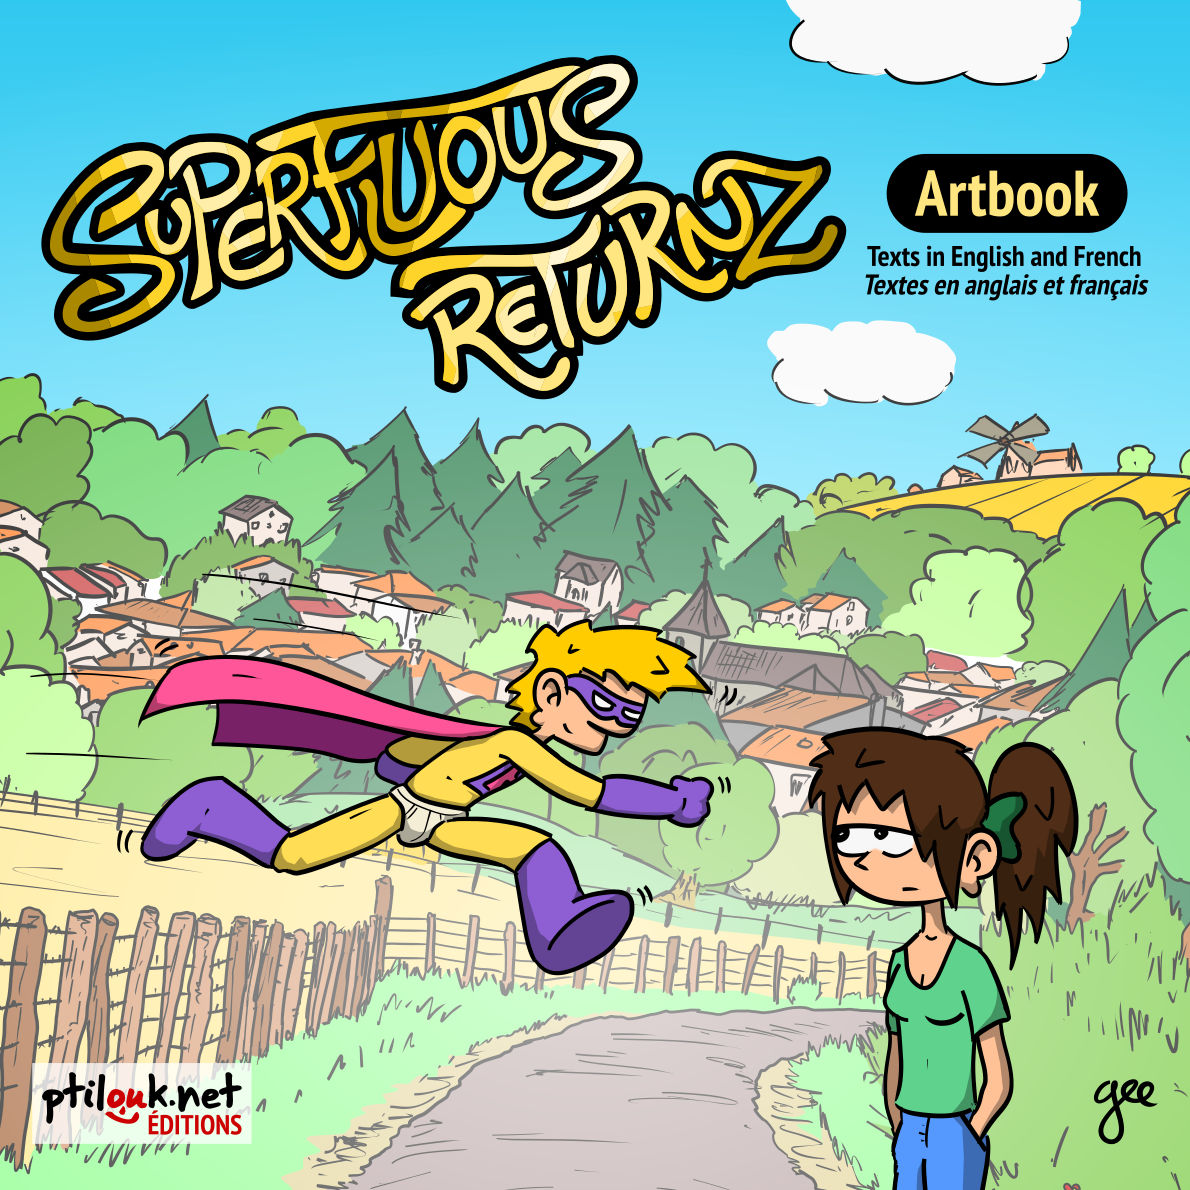 Superfluous Returnz Artbook — Livre d'art accompagnant le jeu vidéo « Superflu Riteurnz ».